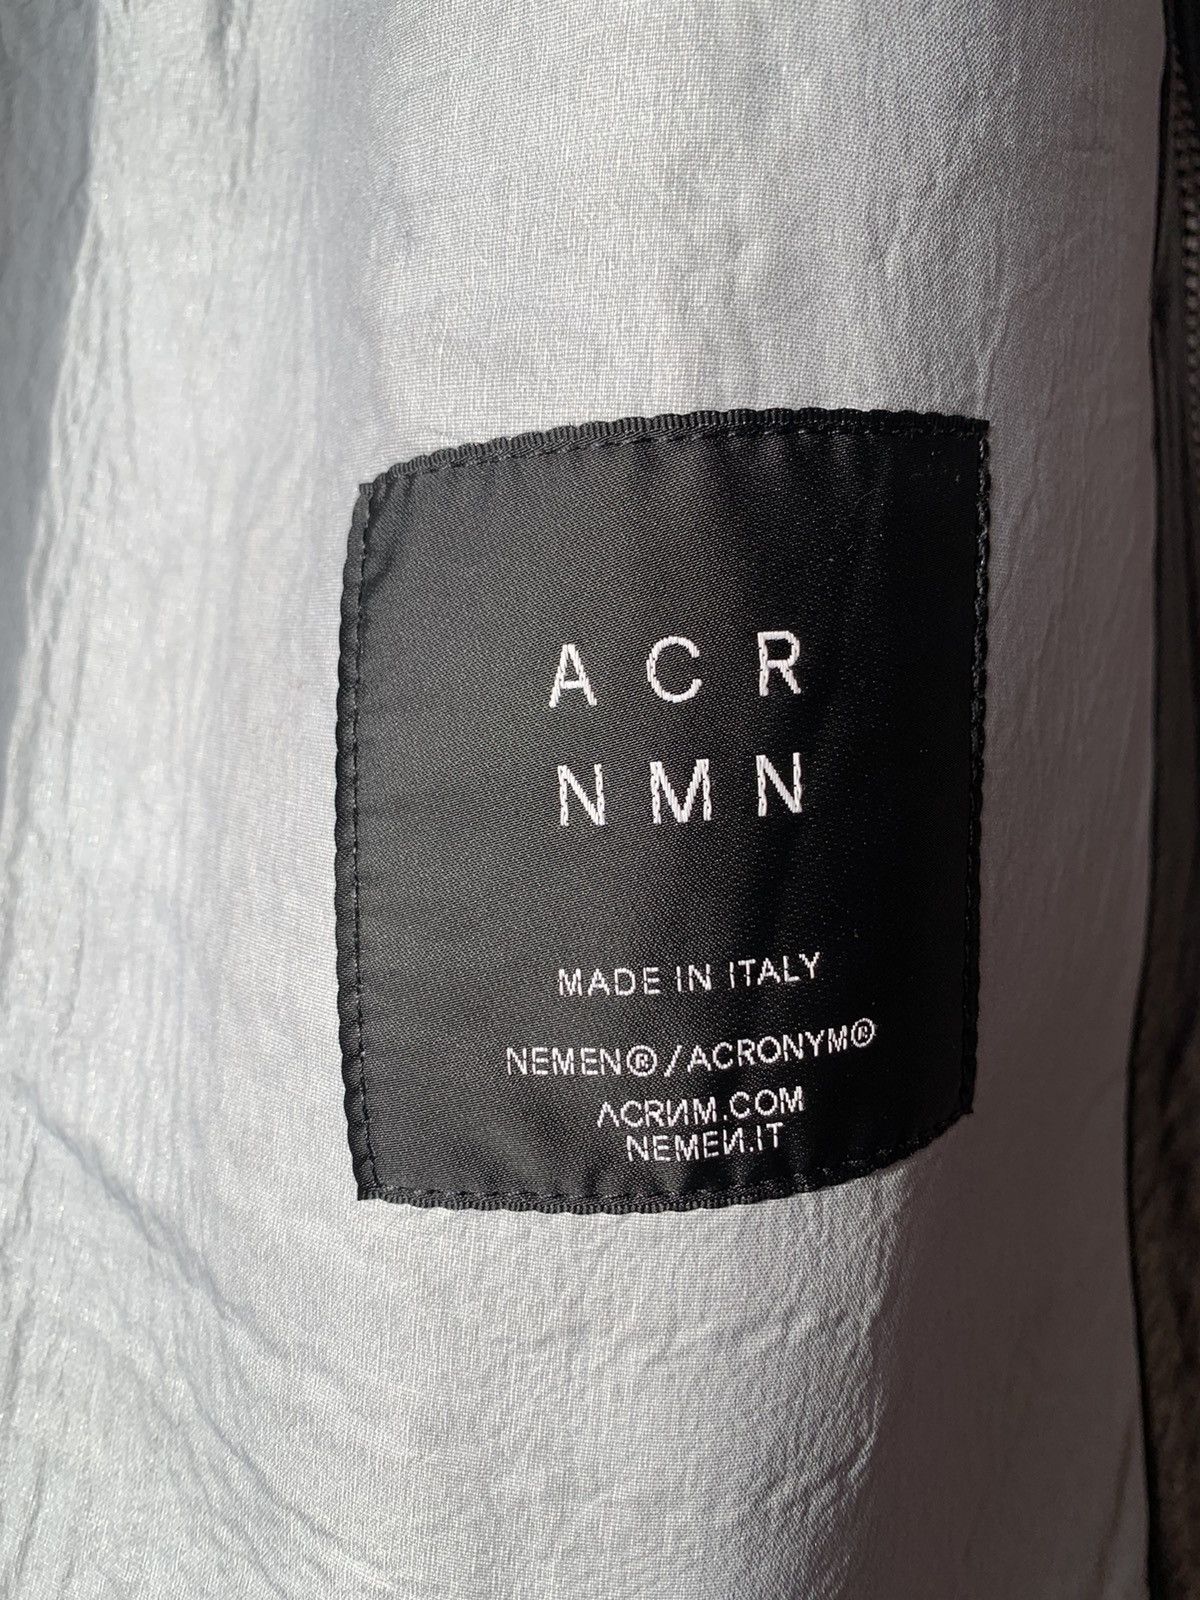 Acronym NMN_ACR_J40_L size medium 3 layer leather jacket Size US M / EU 48-50 / 2 - 3 Thumbnail